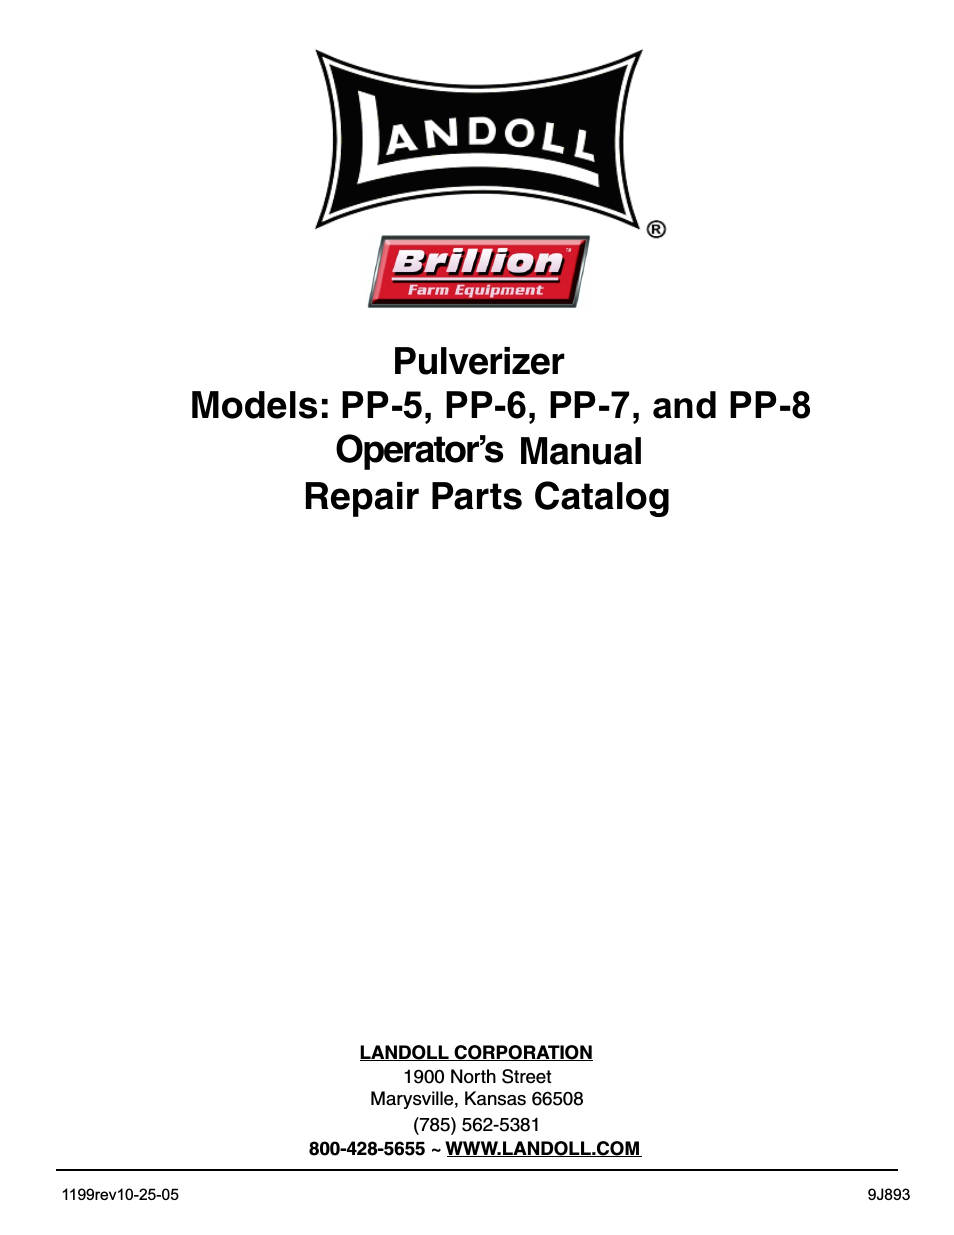 PP-7 Pulverizer